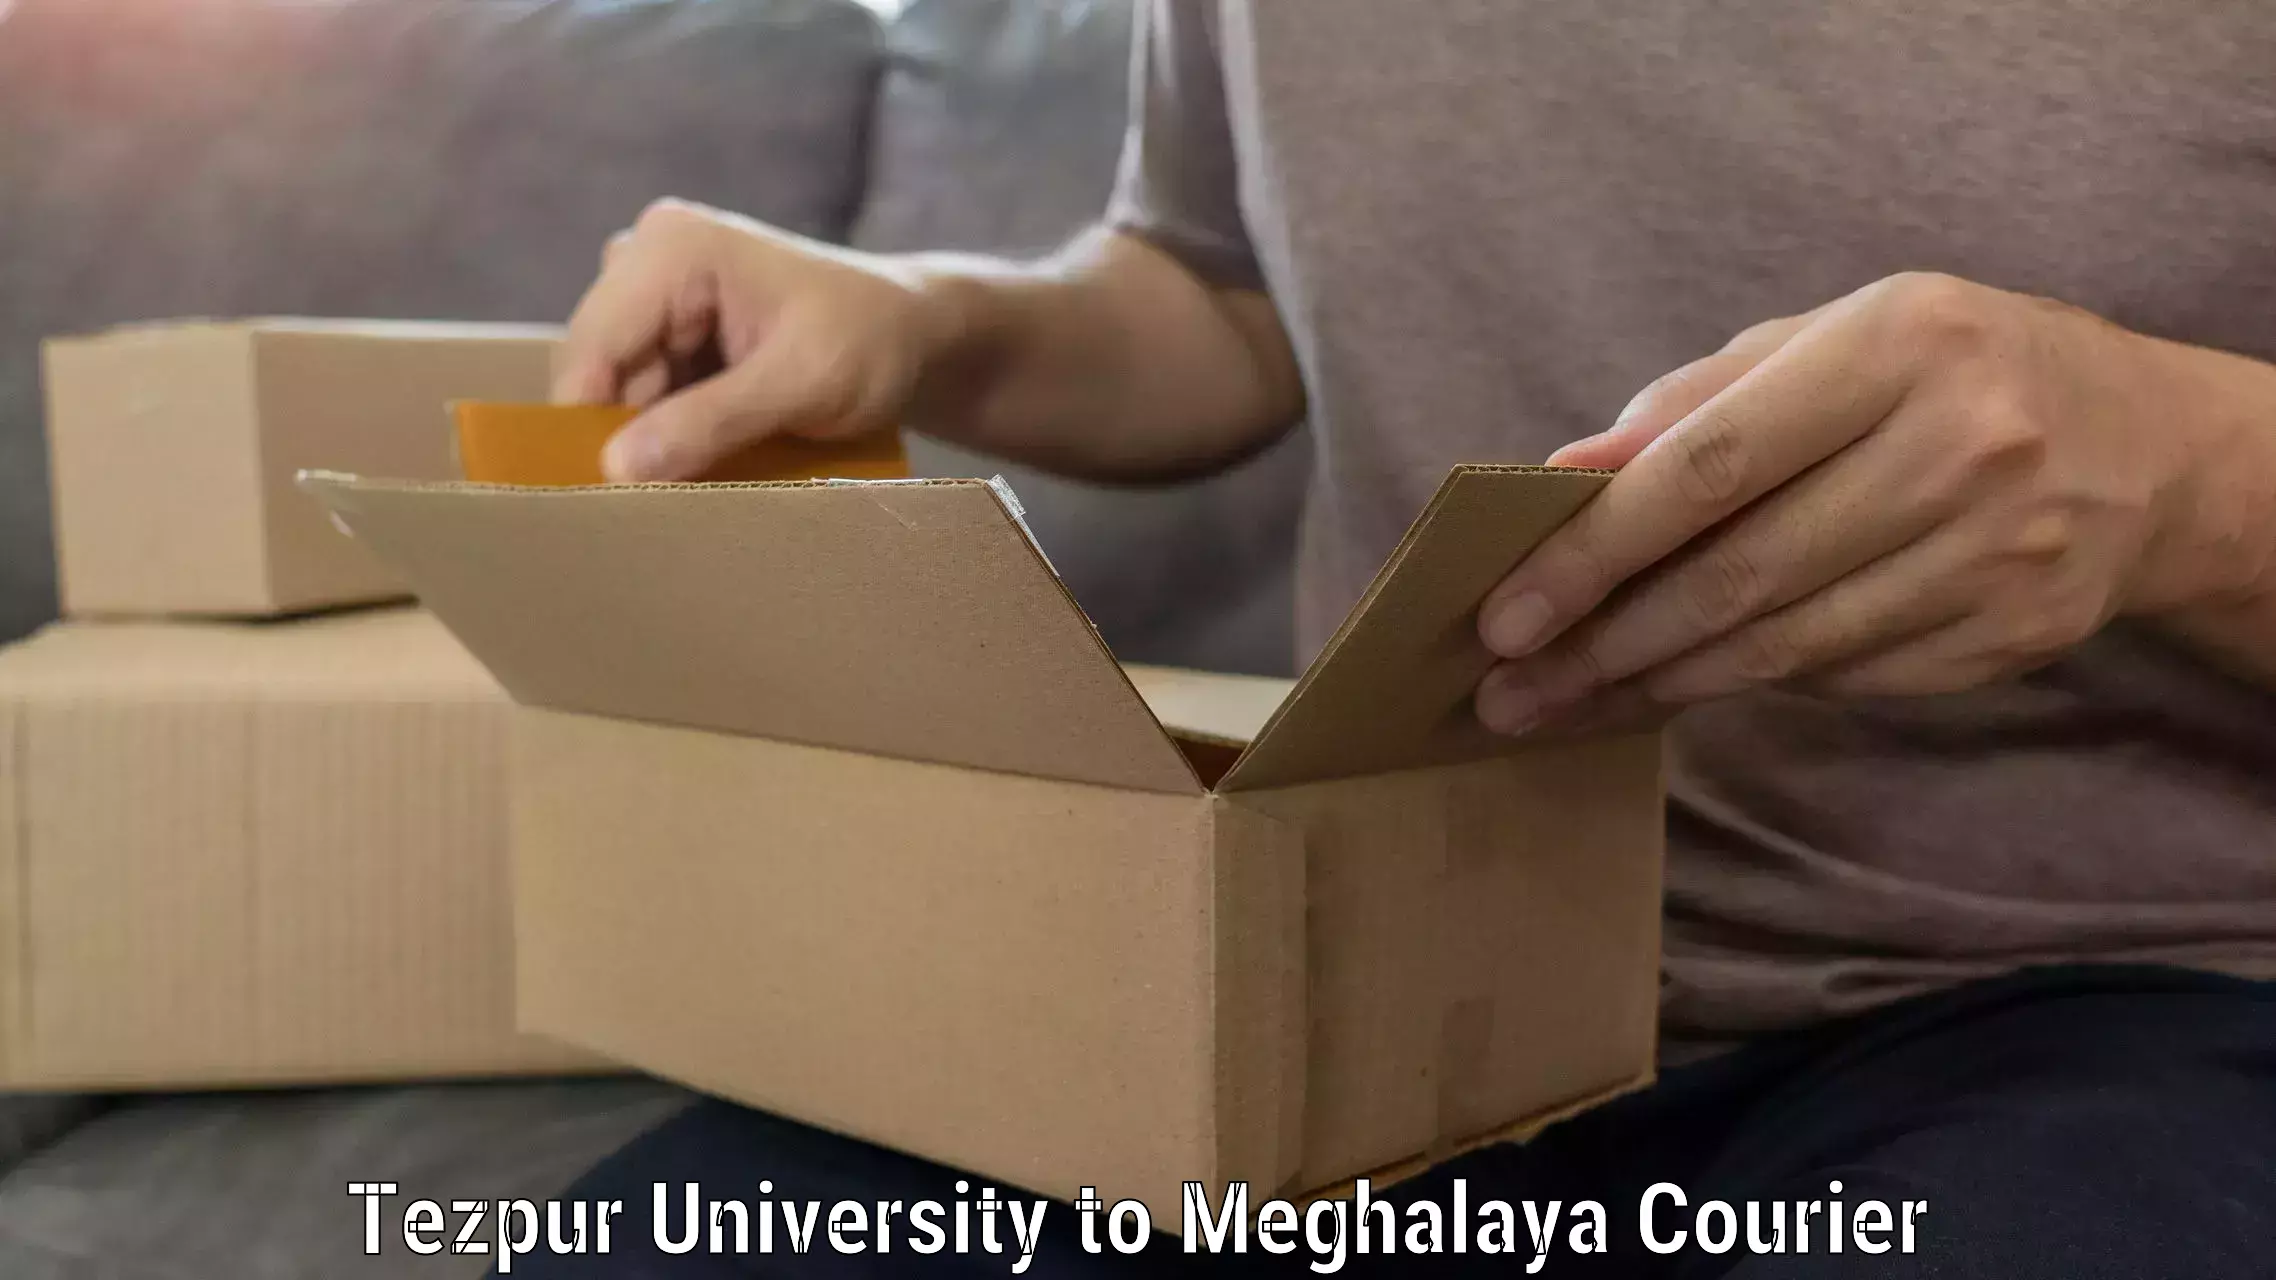 Furniture relocation experts Tezpur University to Meghalaya